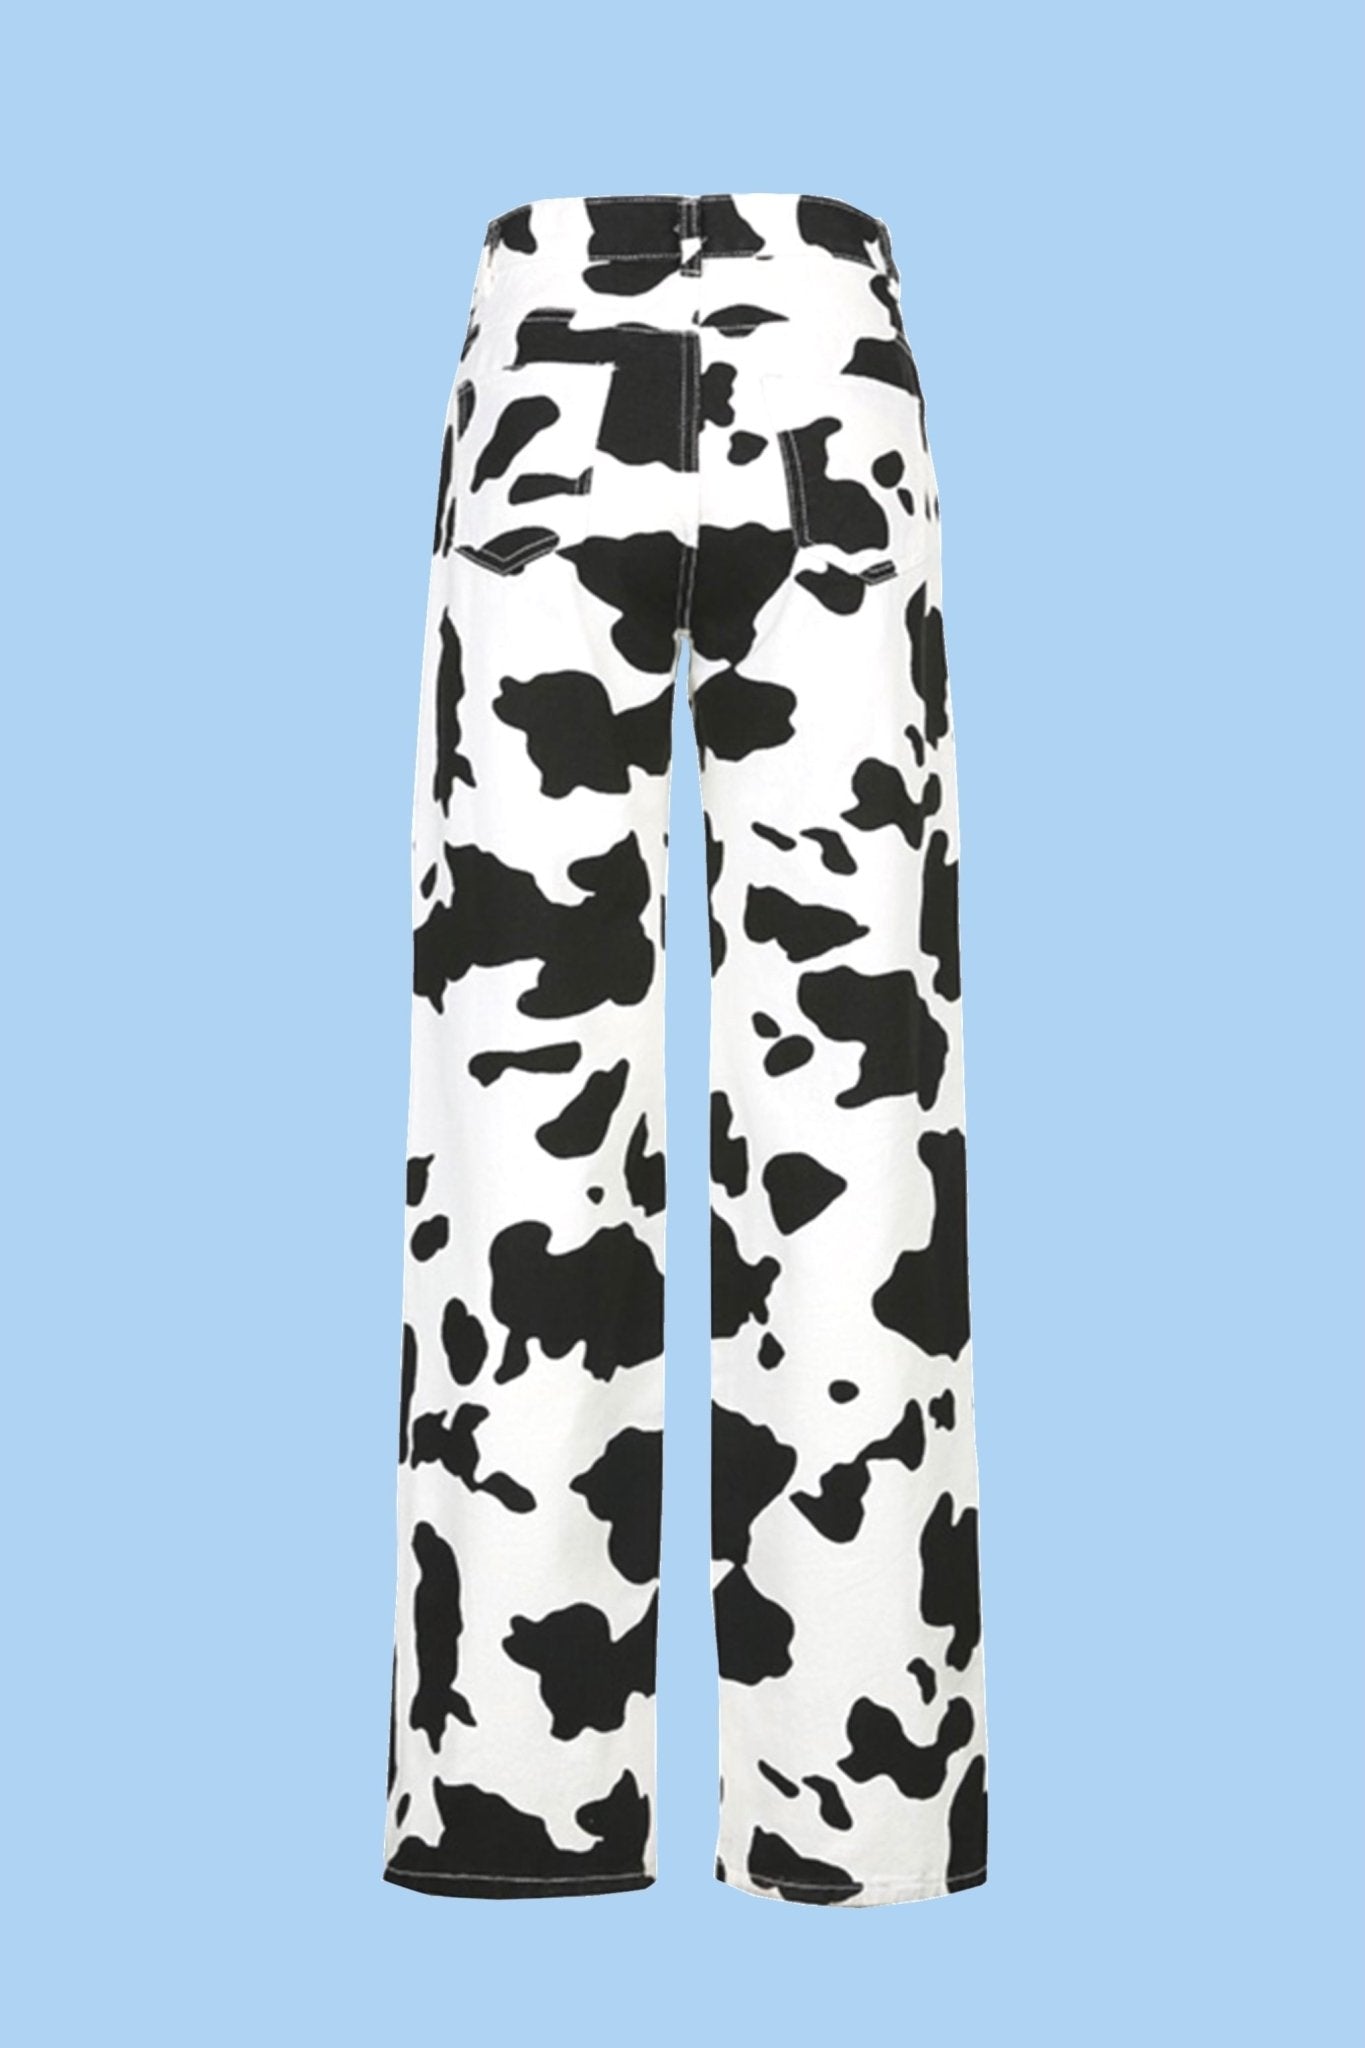 Cow print pants - SCG_COLLECTIONSBottom